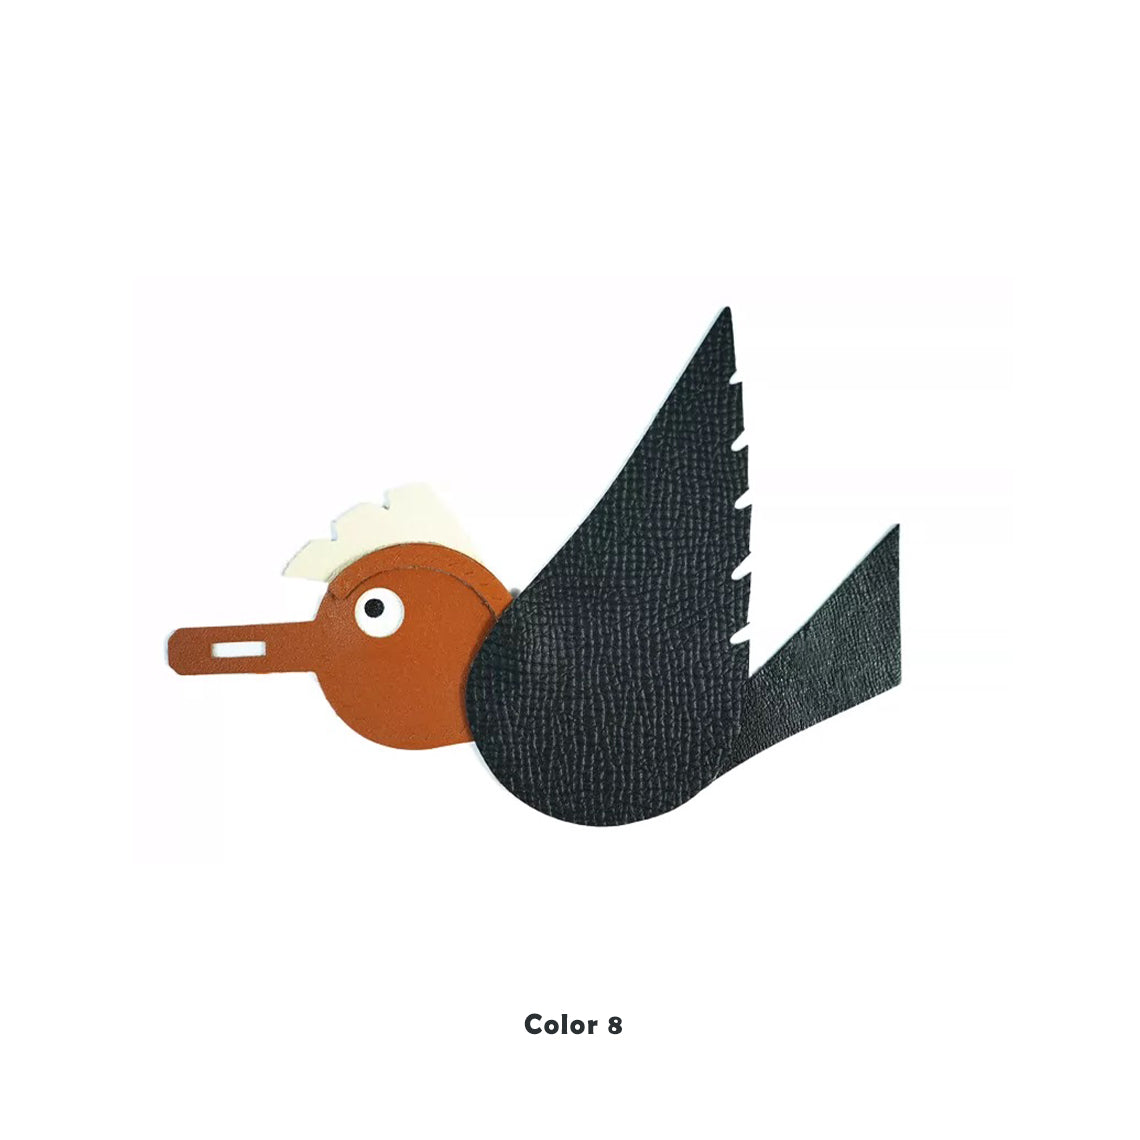 Hermes Birdy Charm Inspired DIY Leather Kit Black Orange